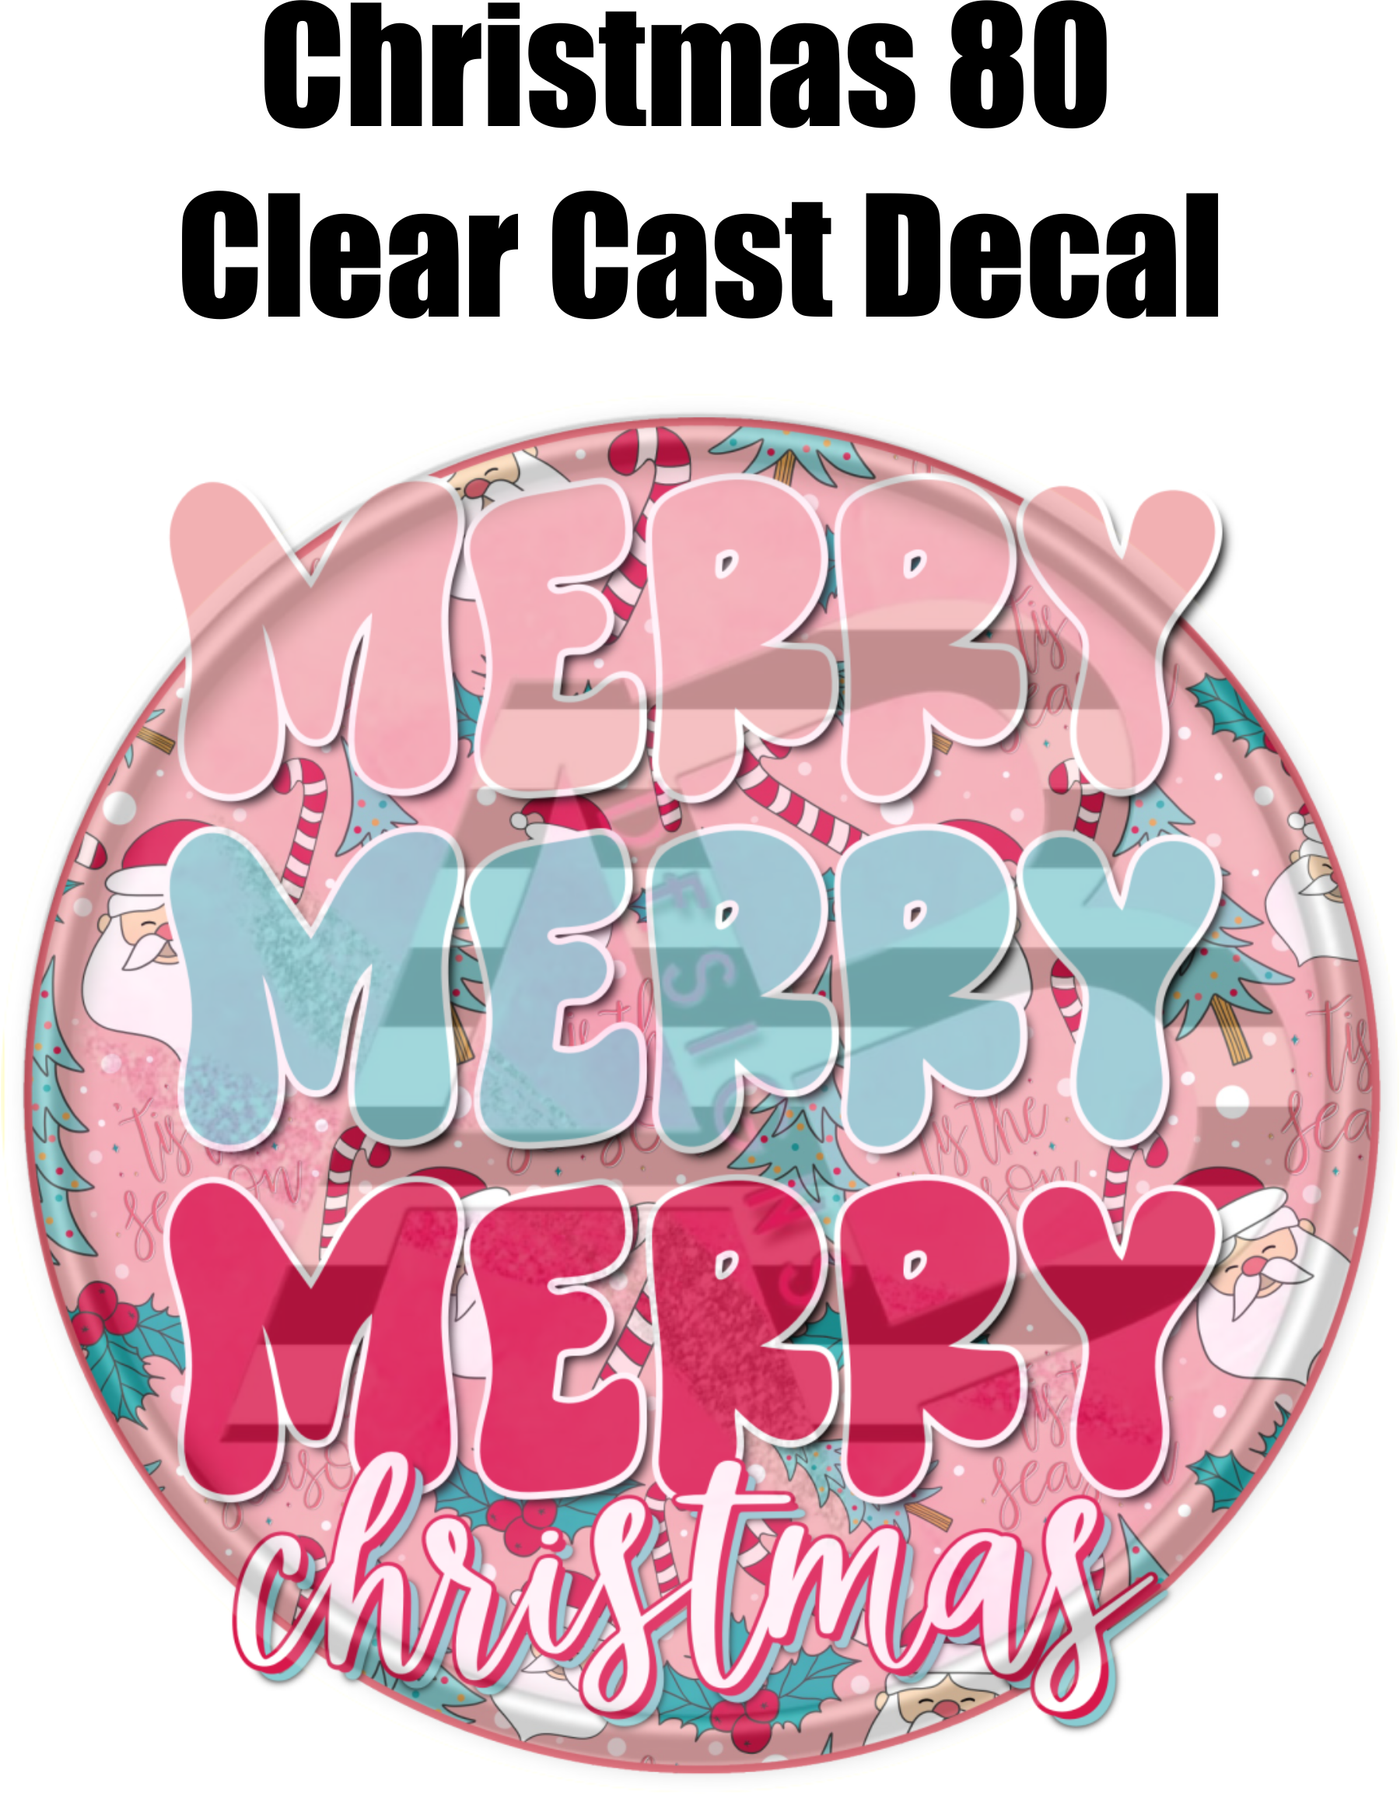 Christmas 80 - Clear Cast Decal